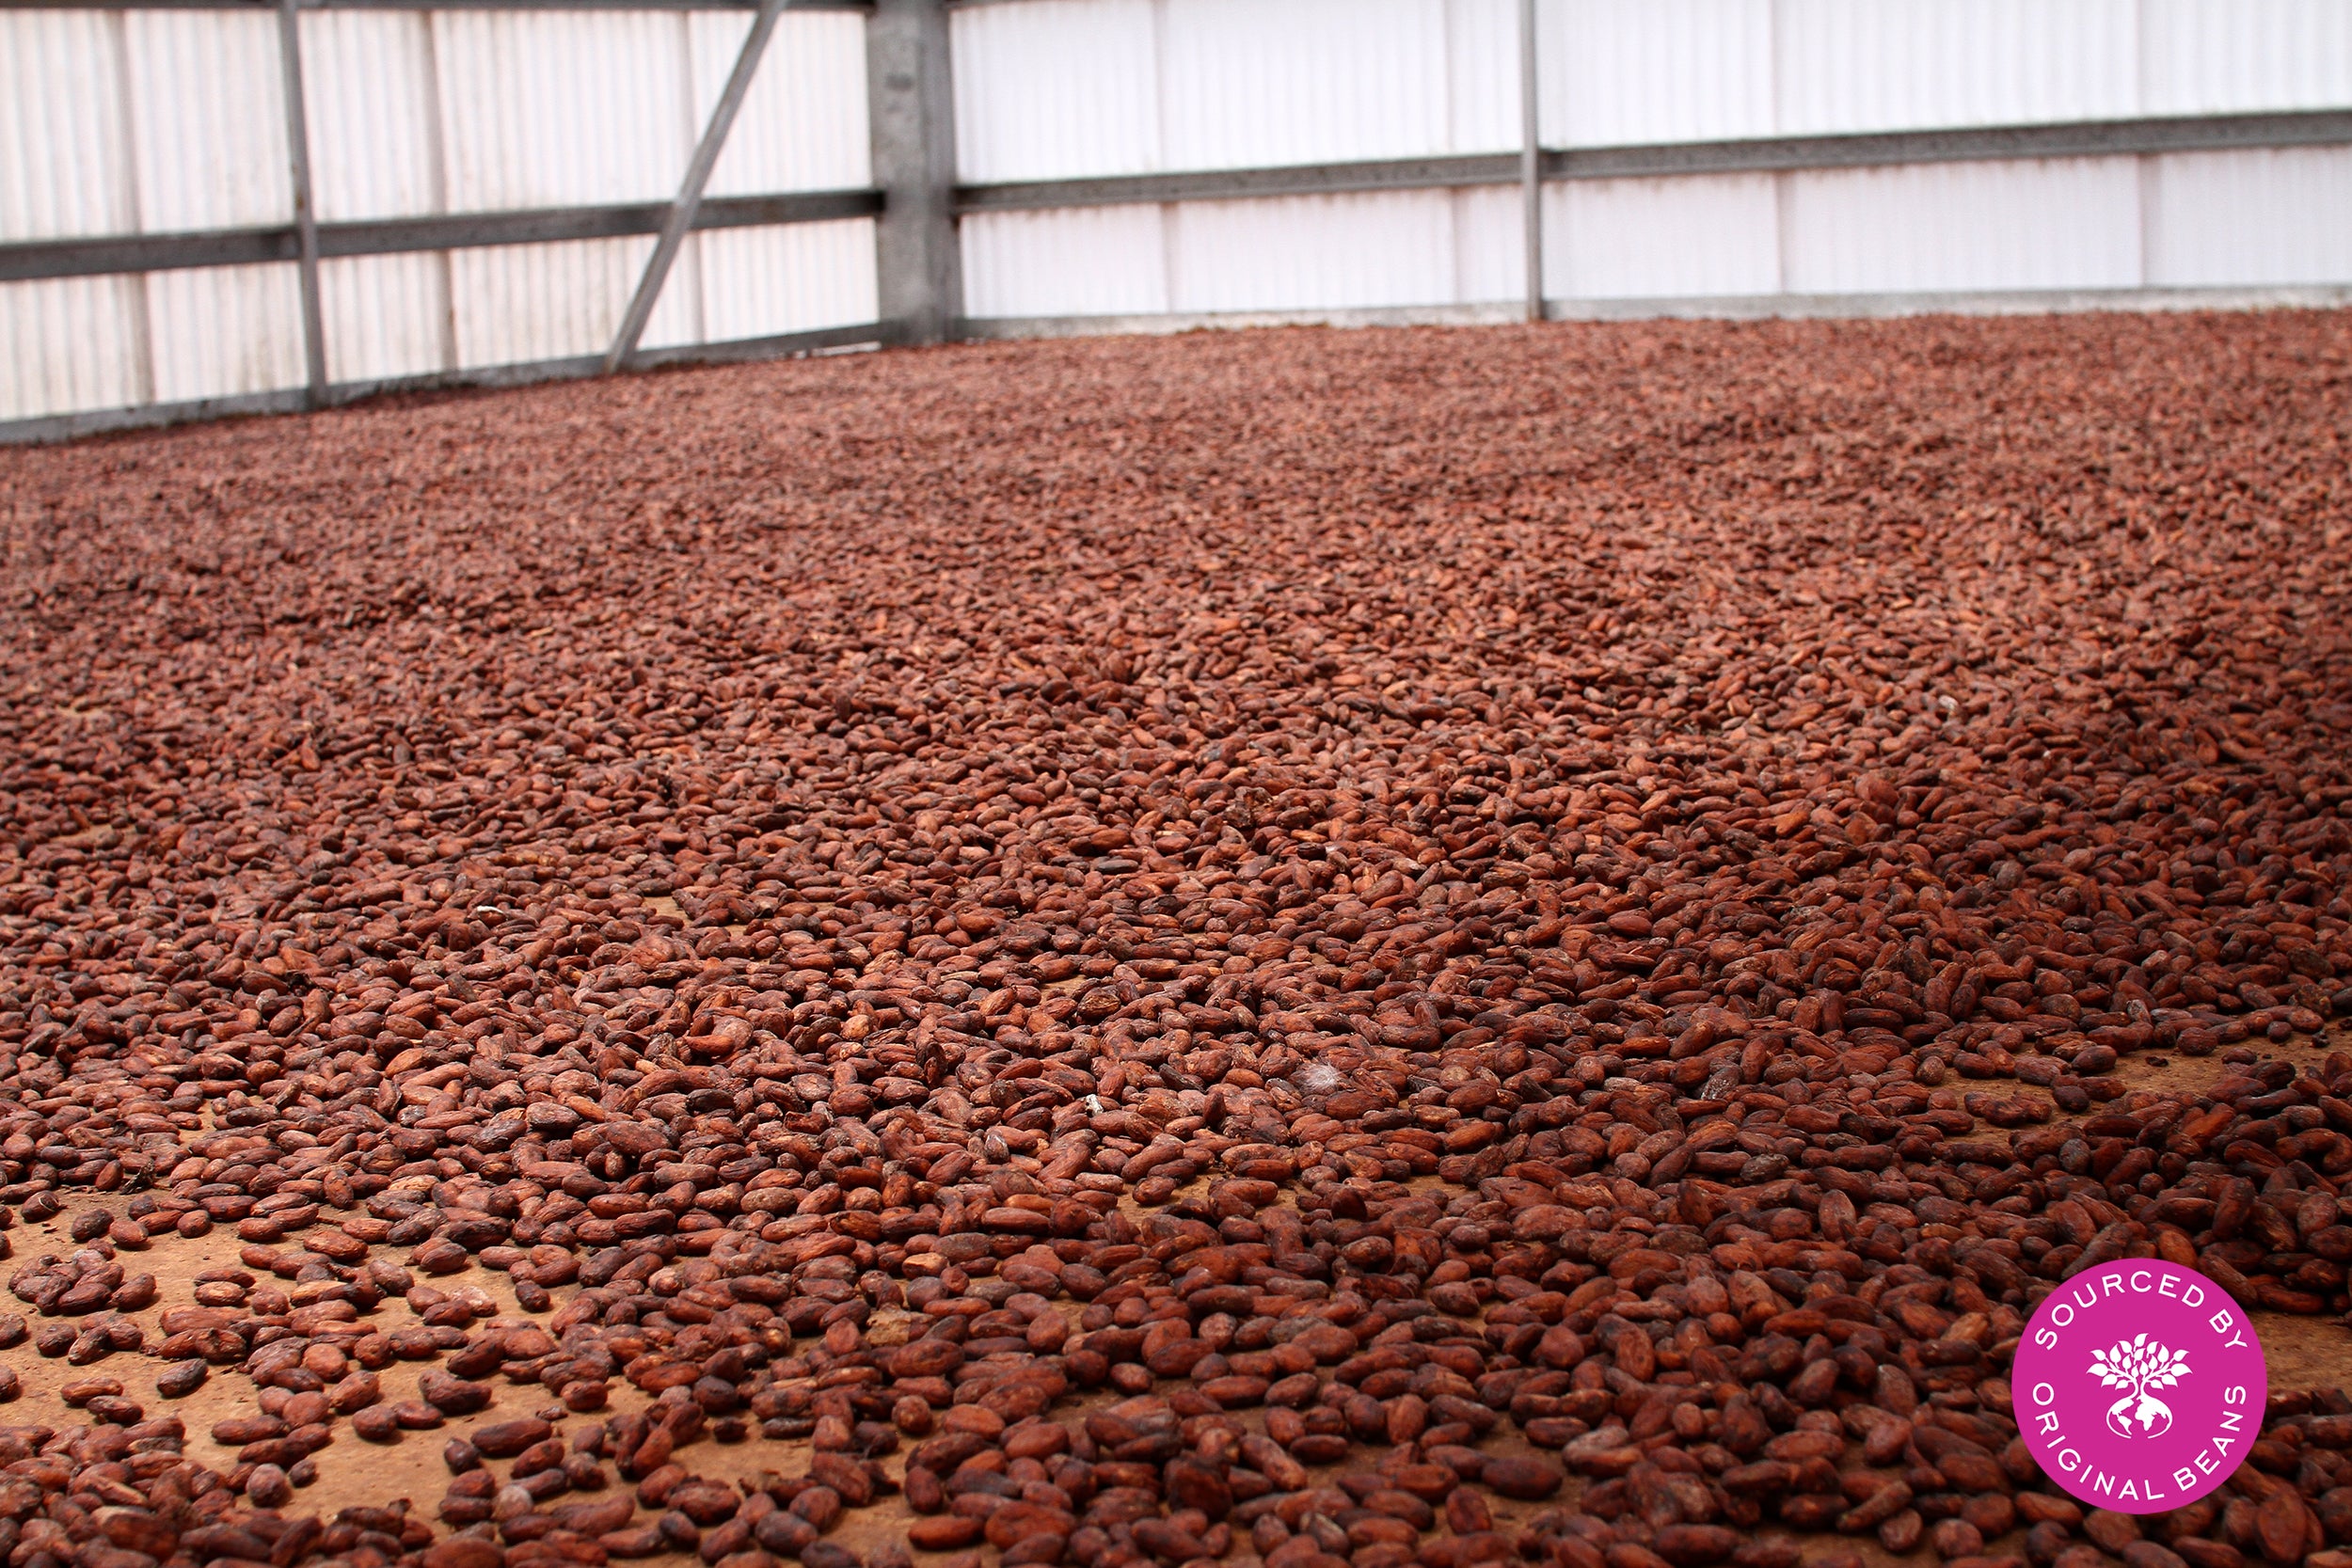 Habas de Cacao La Lingüeta/Colombia Original Beans 2,5KG